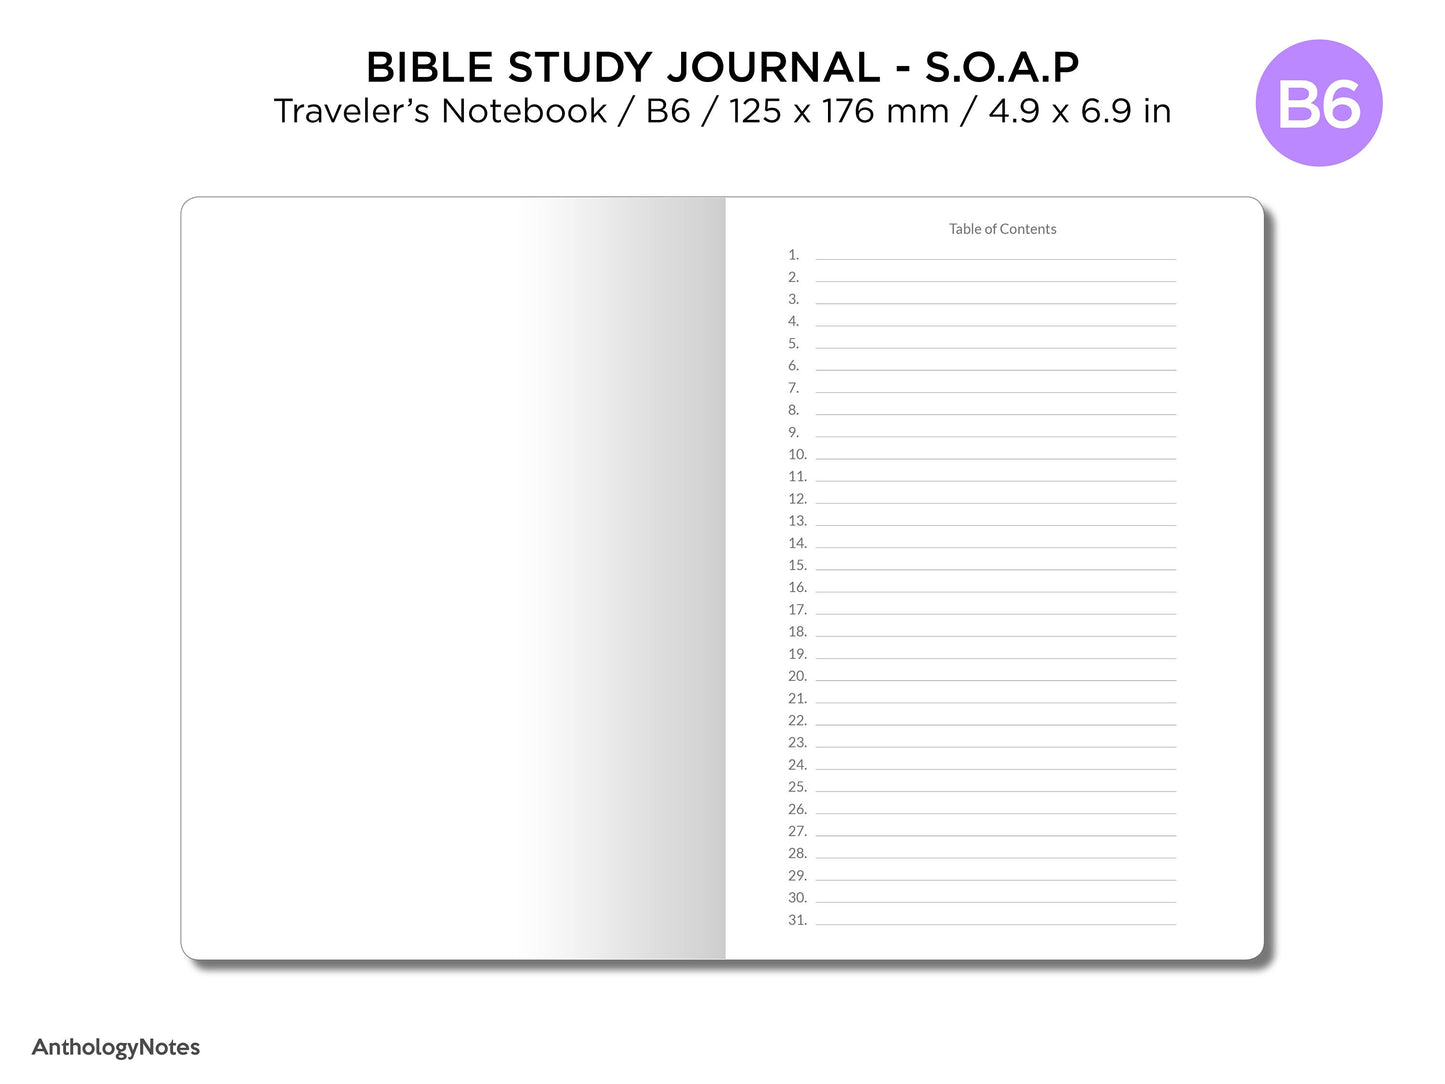 B6 Daily Study Bible Journal S.O.A.P Traveler's Notebook Insert GRID Minimalist Devotional Planner